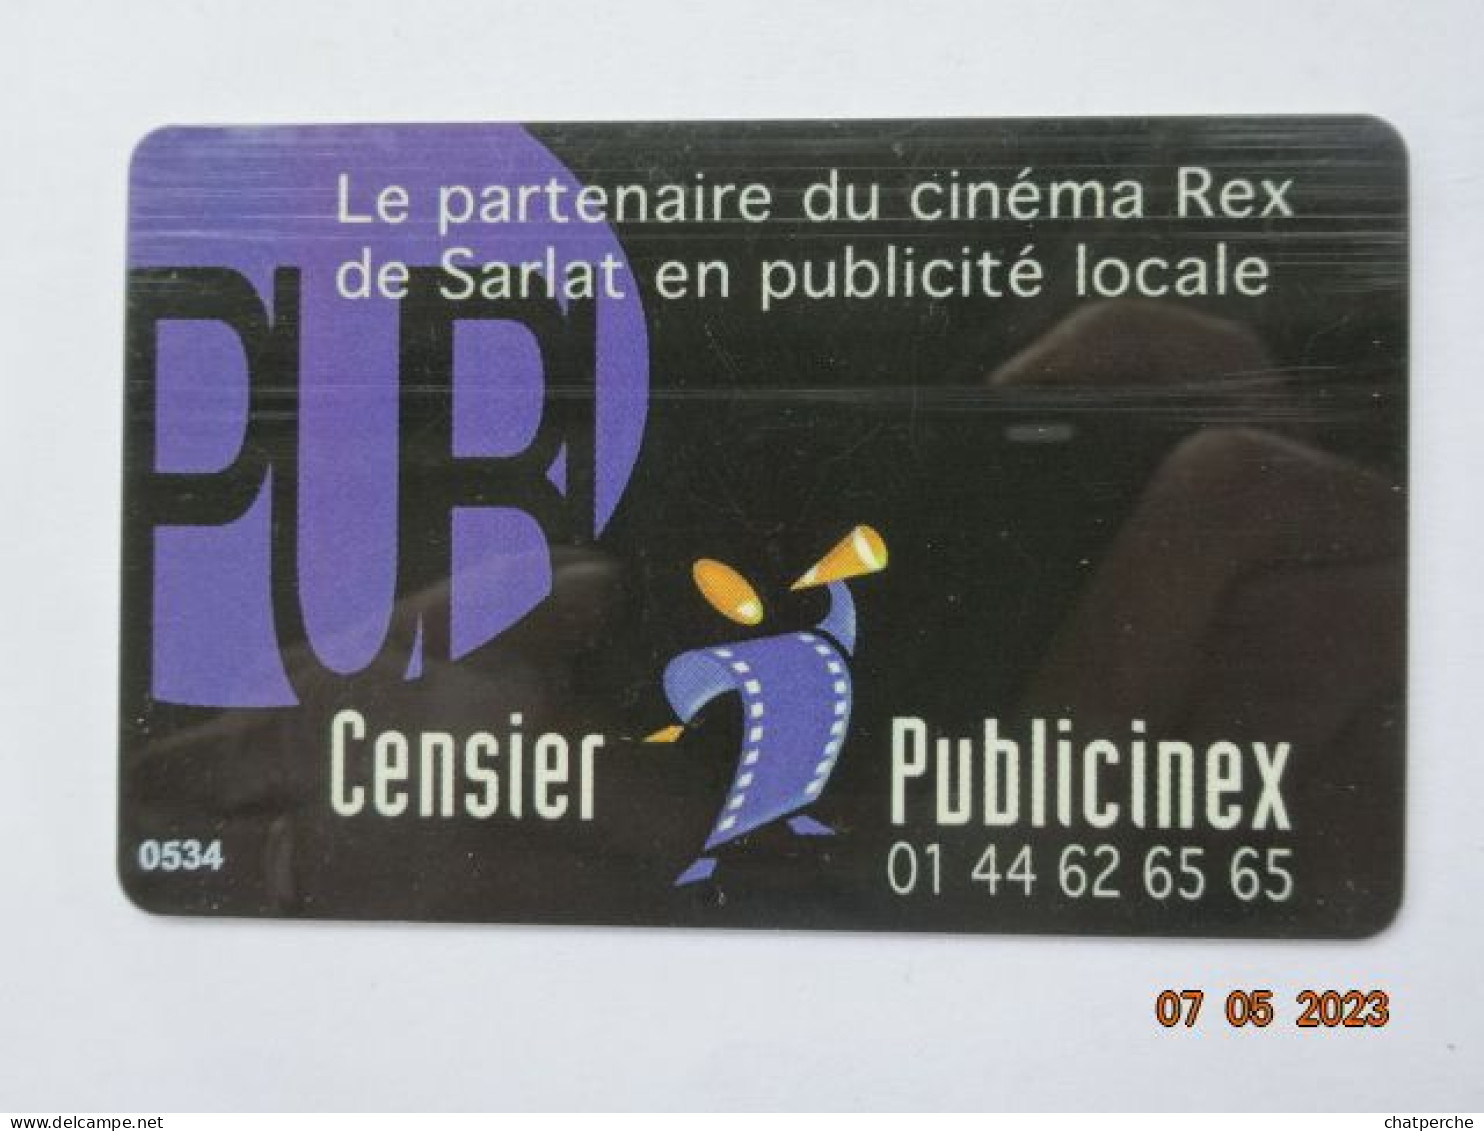 CINECARTE CARTE CINEMA CINE CARD BANDE MAGNETIQUE  CINEMA REX A SARLAT  24 DORDOGNE  CENSIER PUBLICINEX - Cinécartes